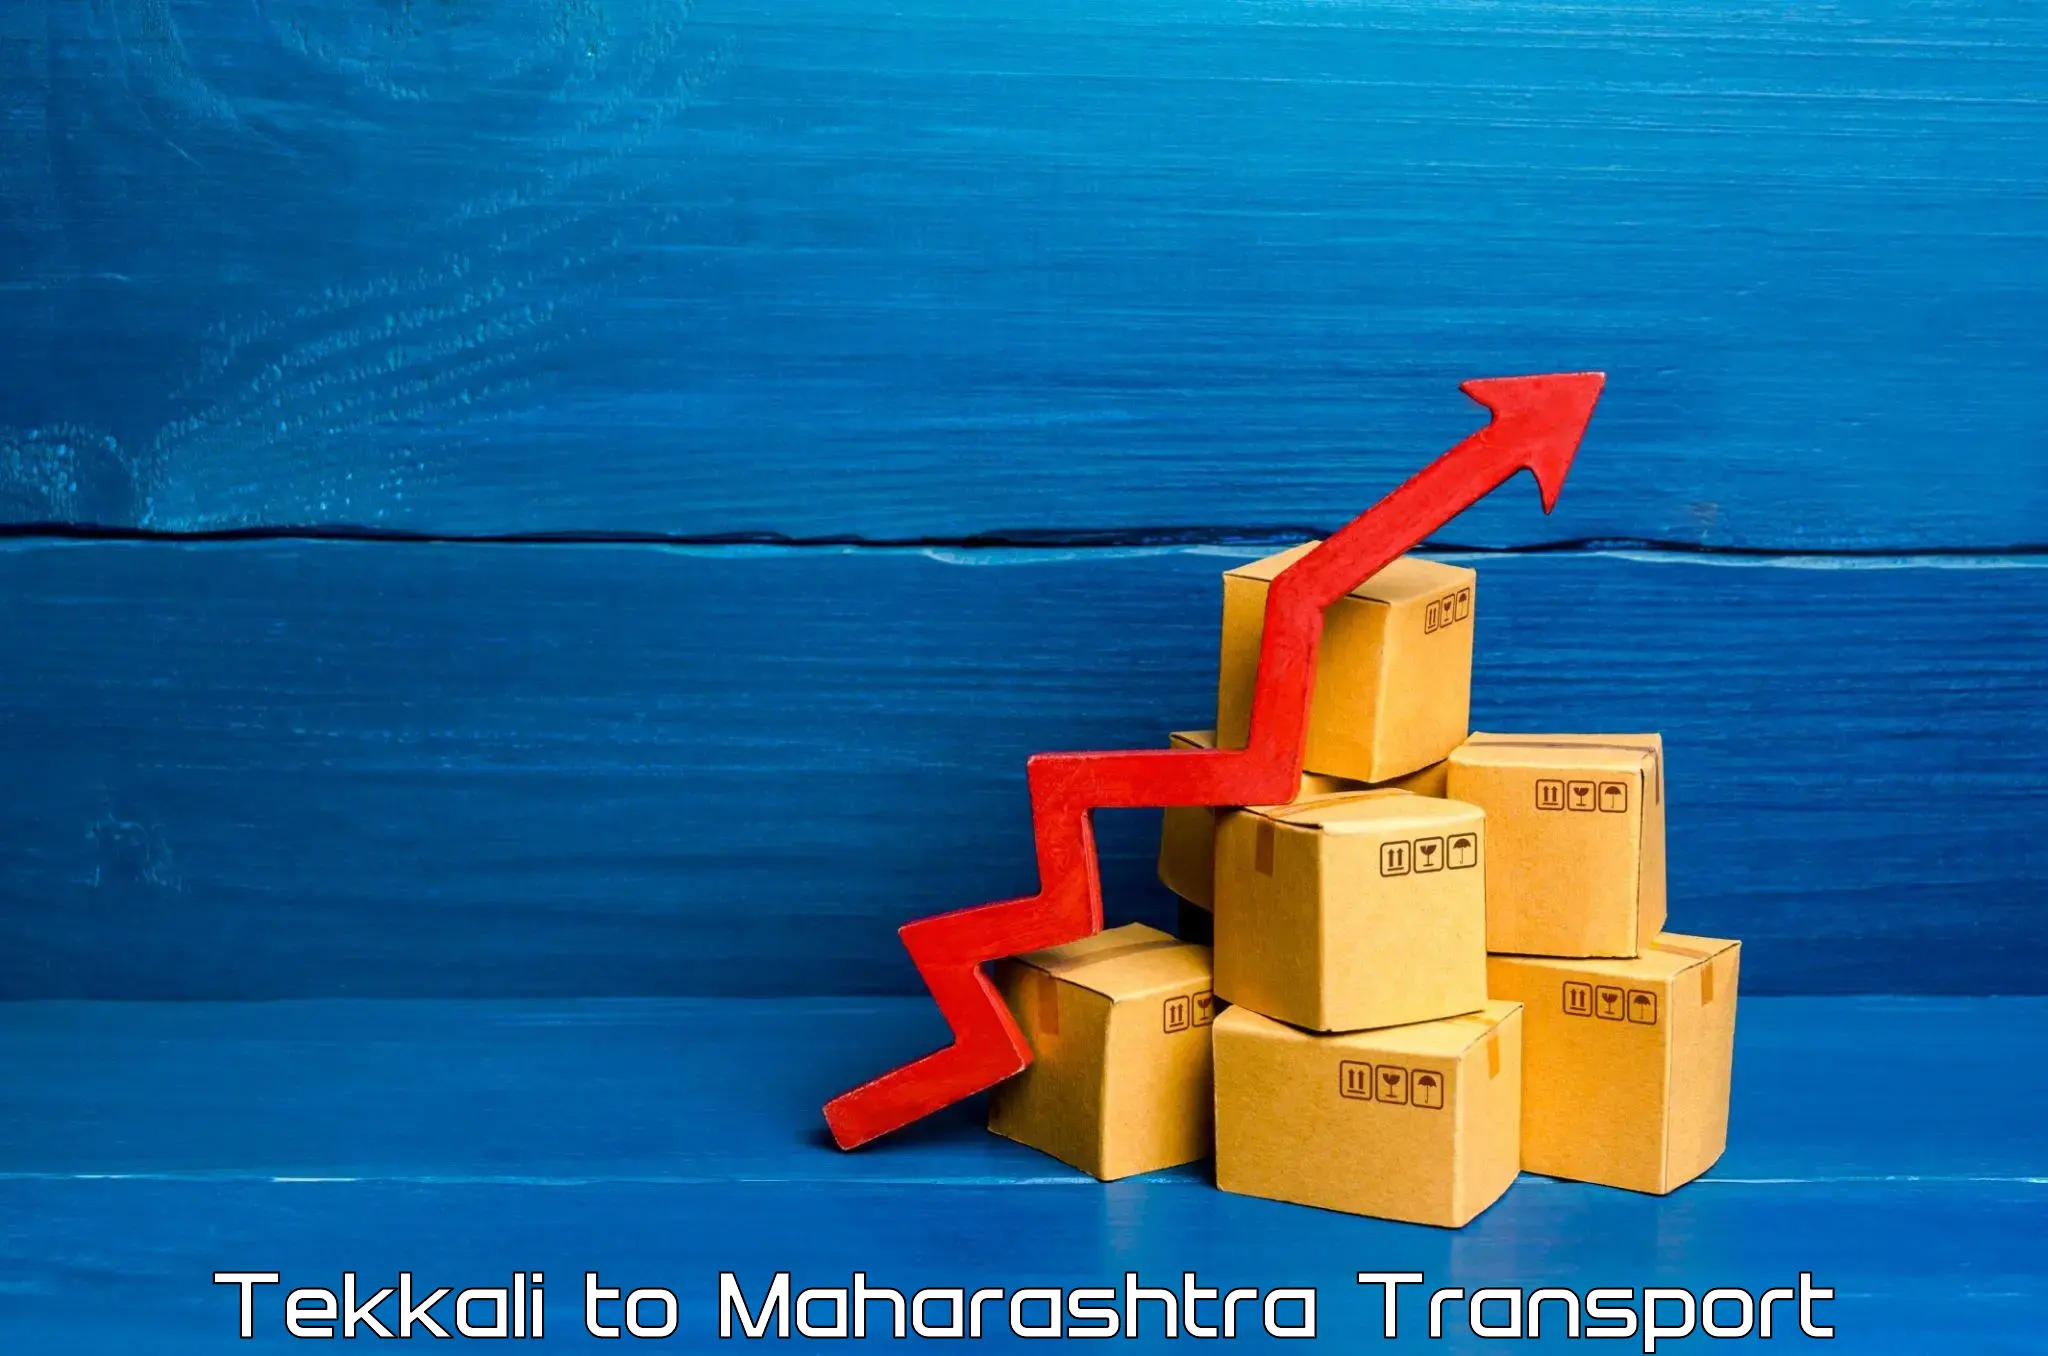 Lorry transport service Tekkali to Maharashtra